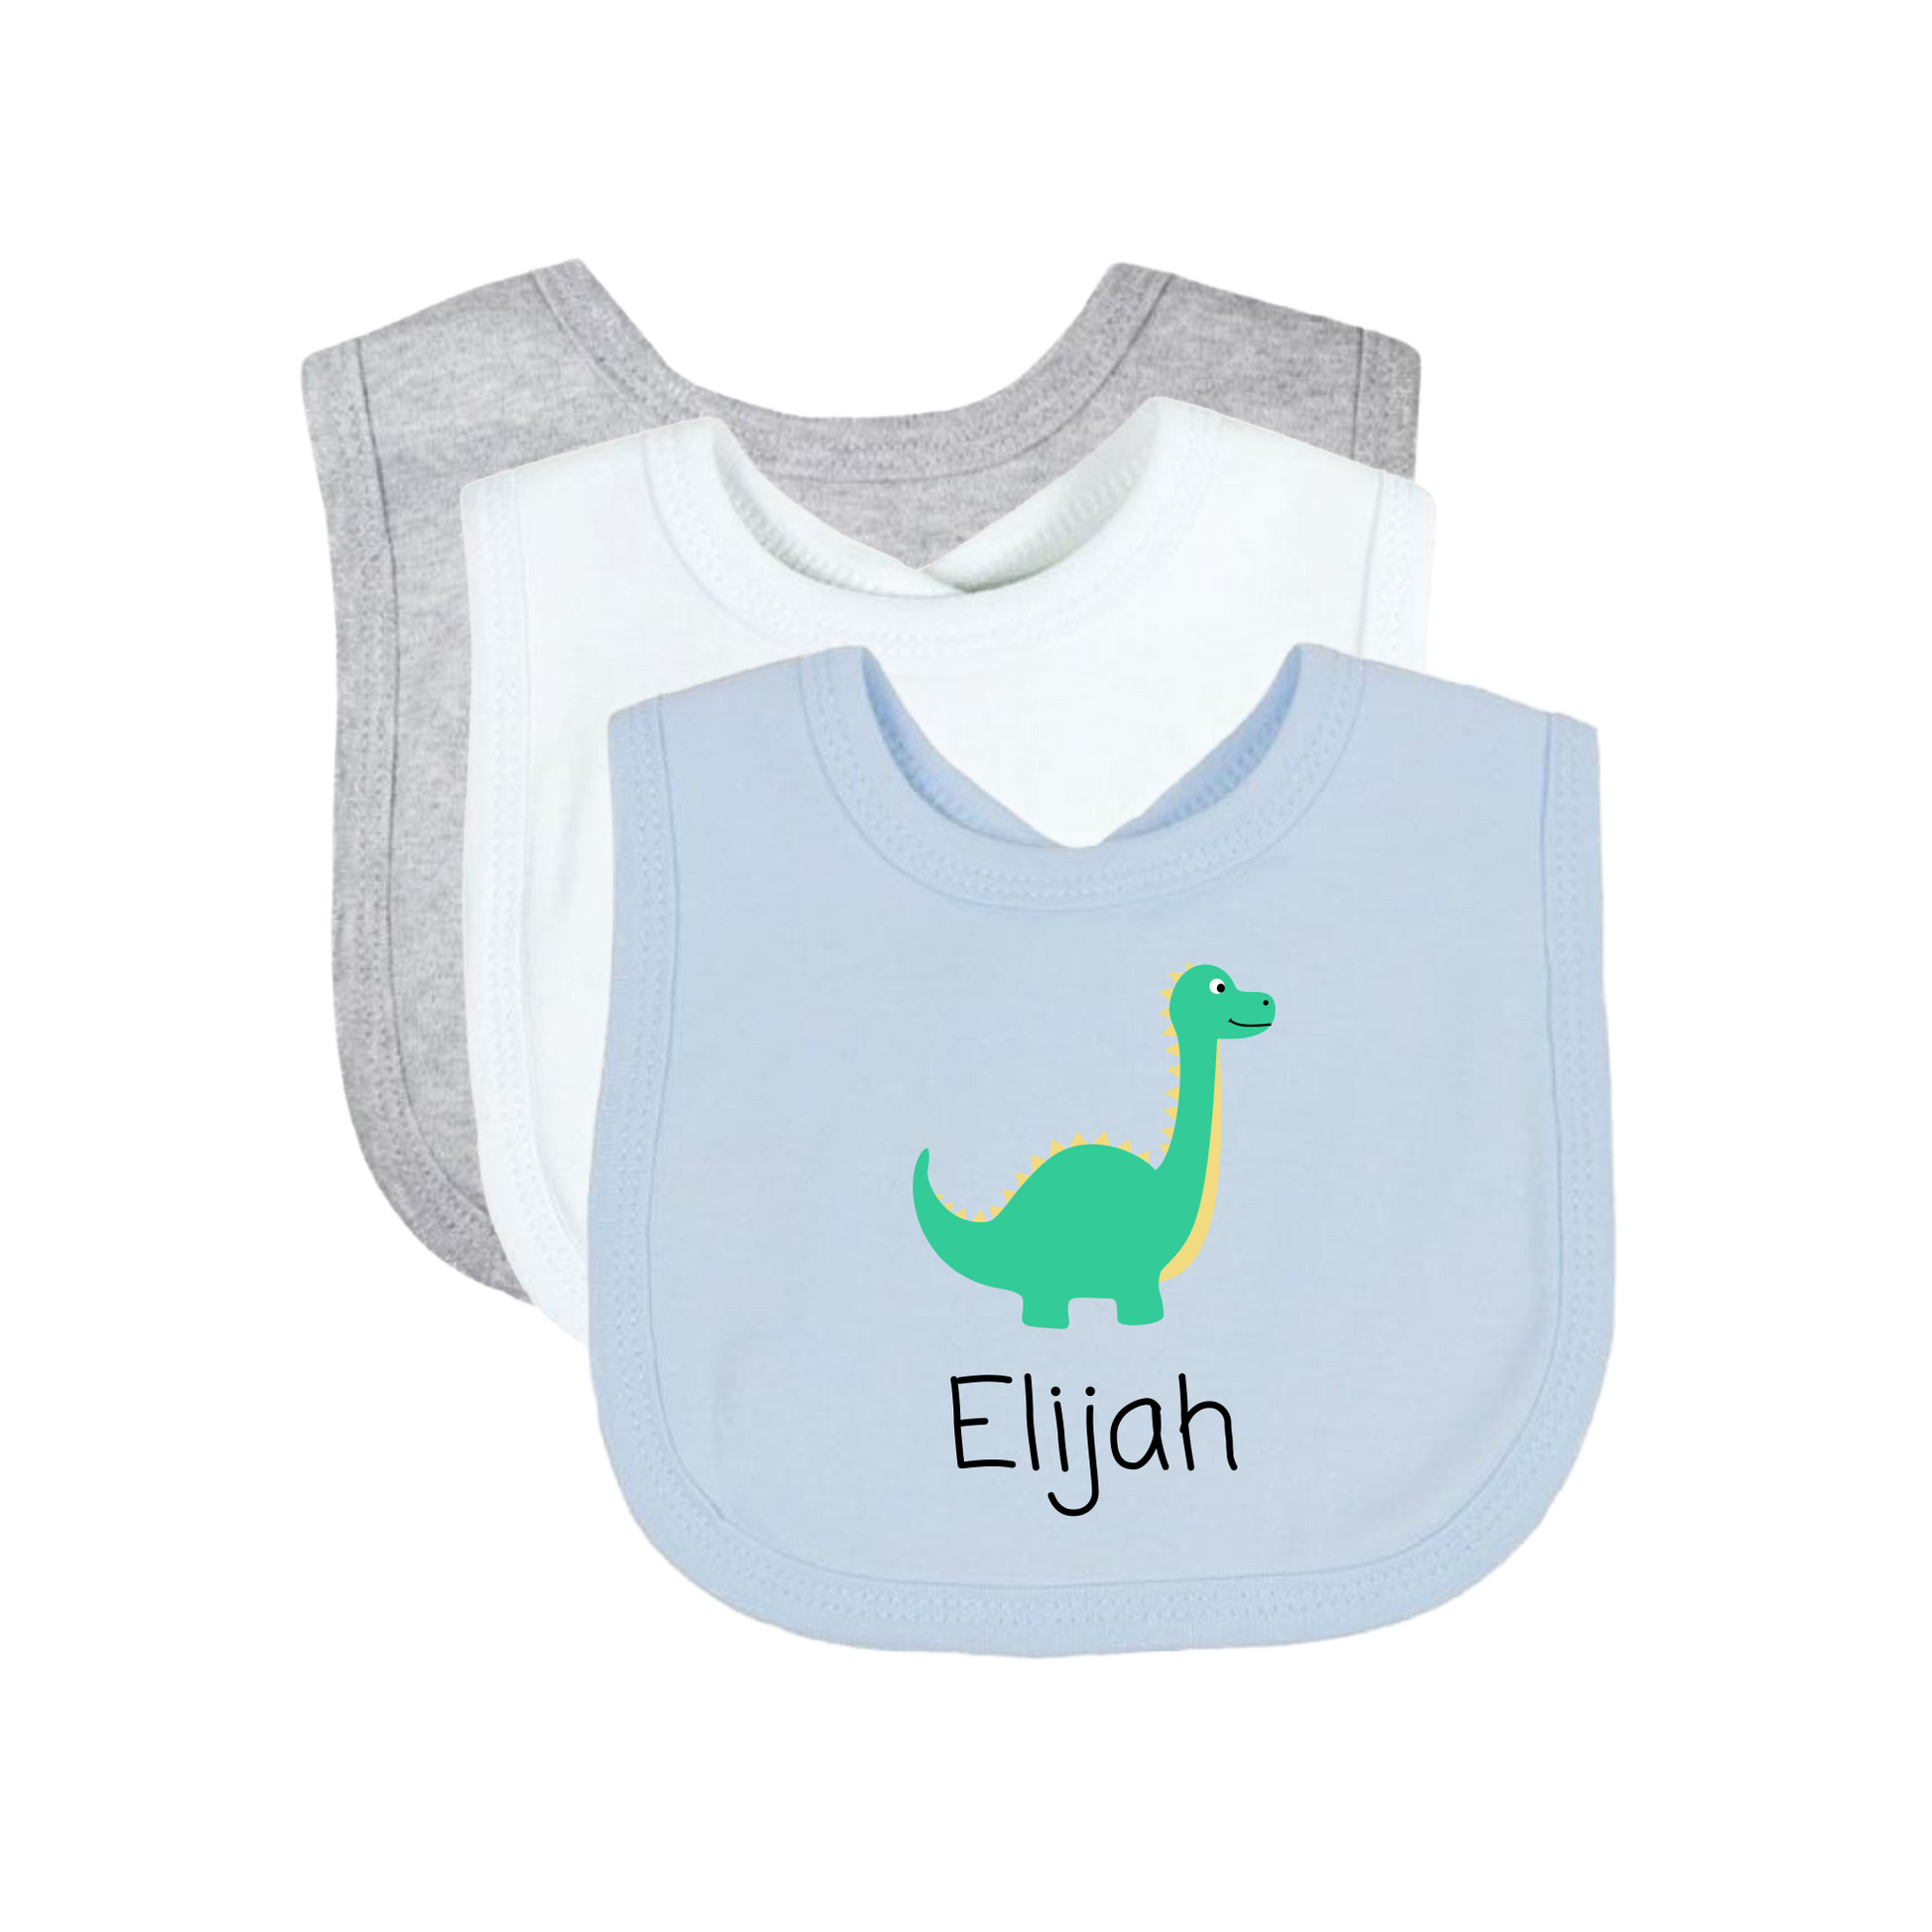 Personalised Baby Bib Gift Set - Dino My Little One